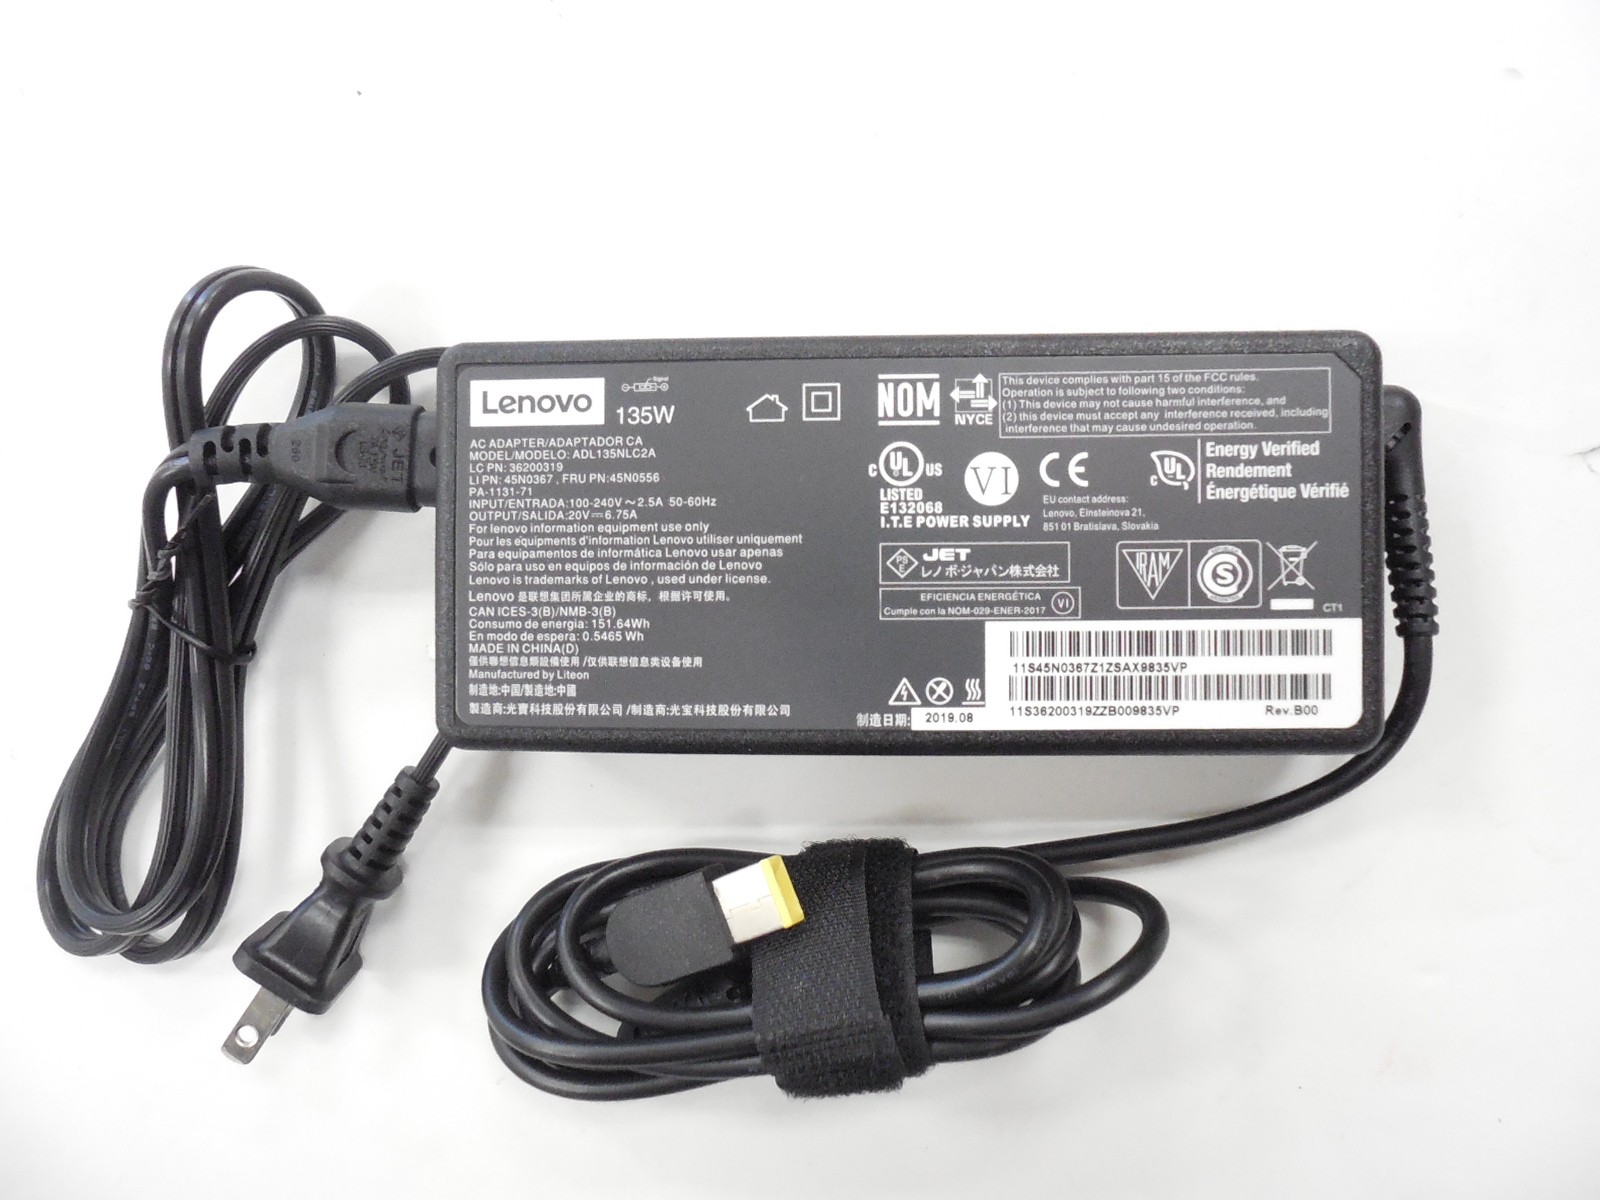 Lenovo ThinkPad 135W AC Adapter Slim Tip Power Supply 4X20E50558 Original OEM